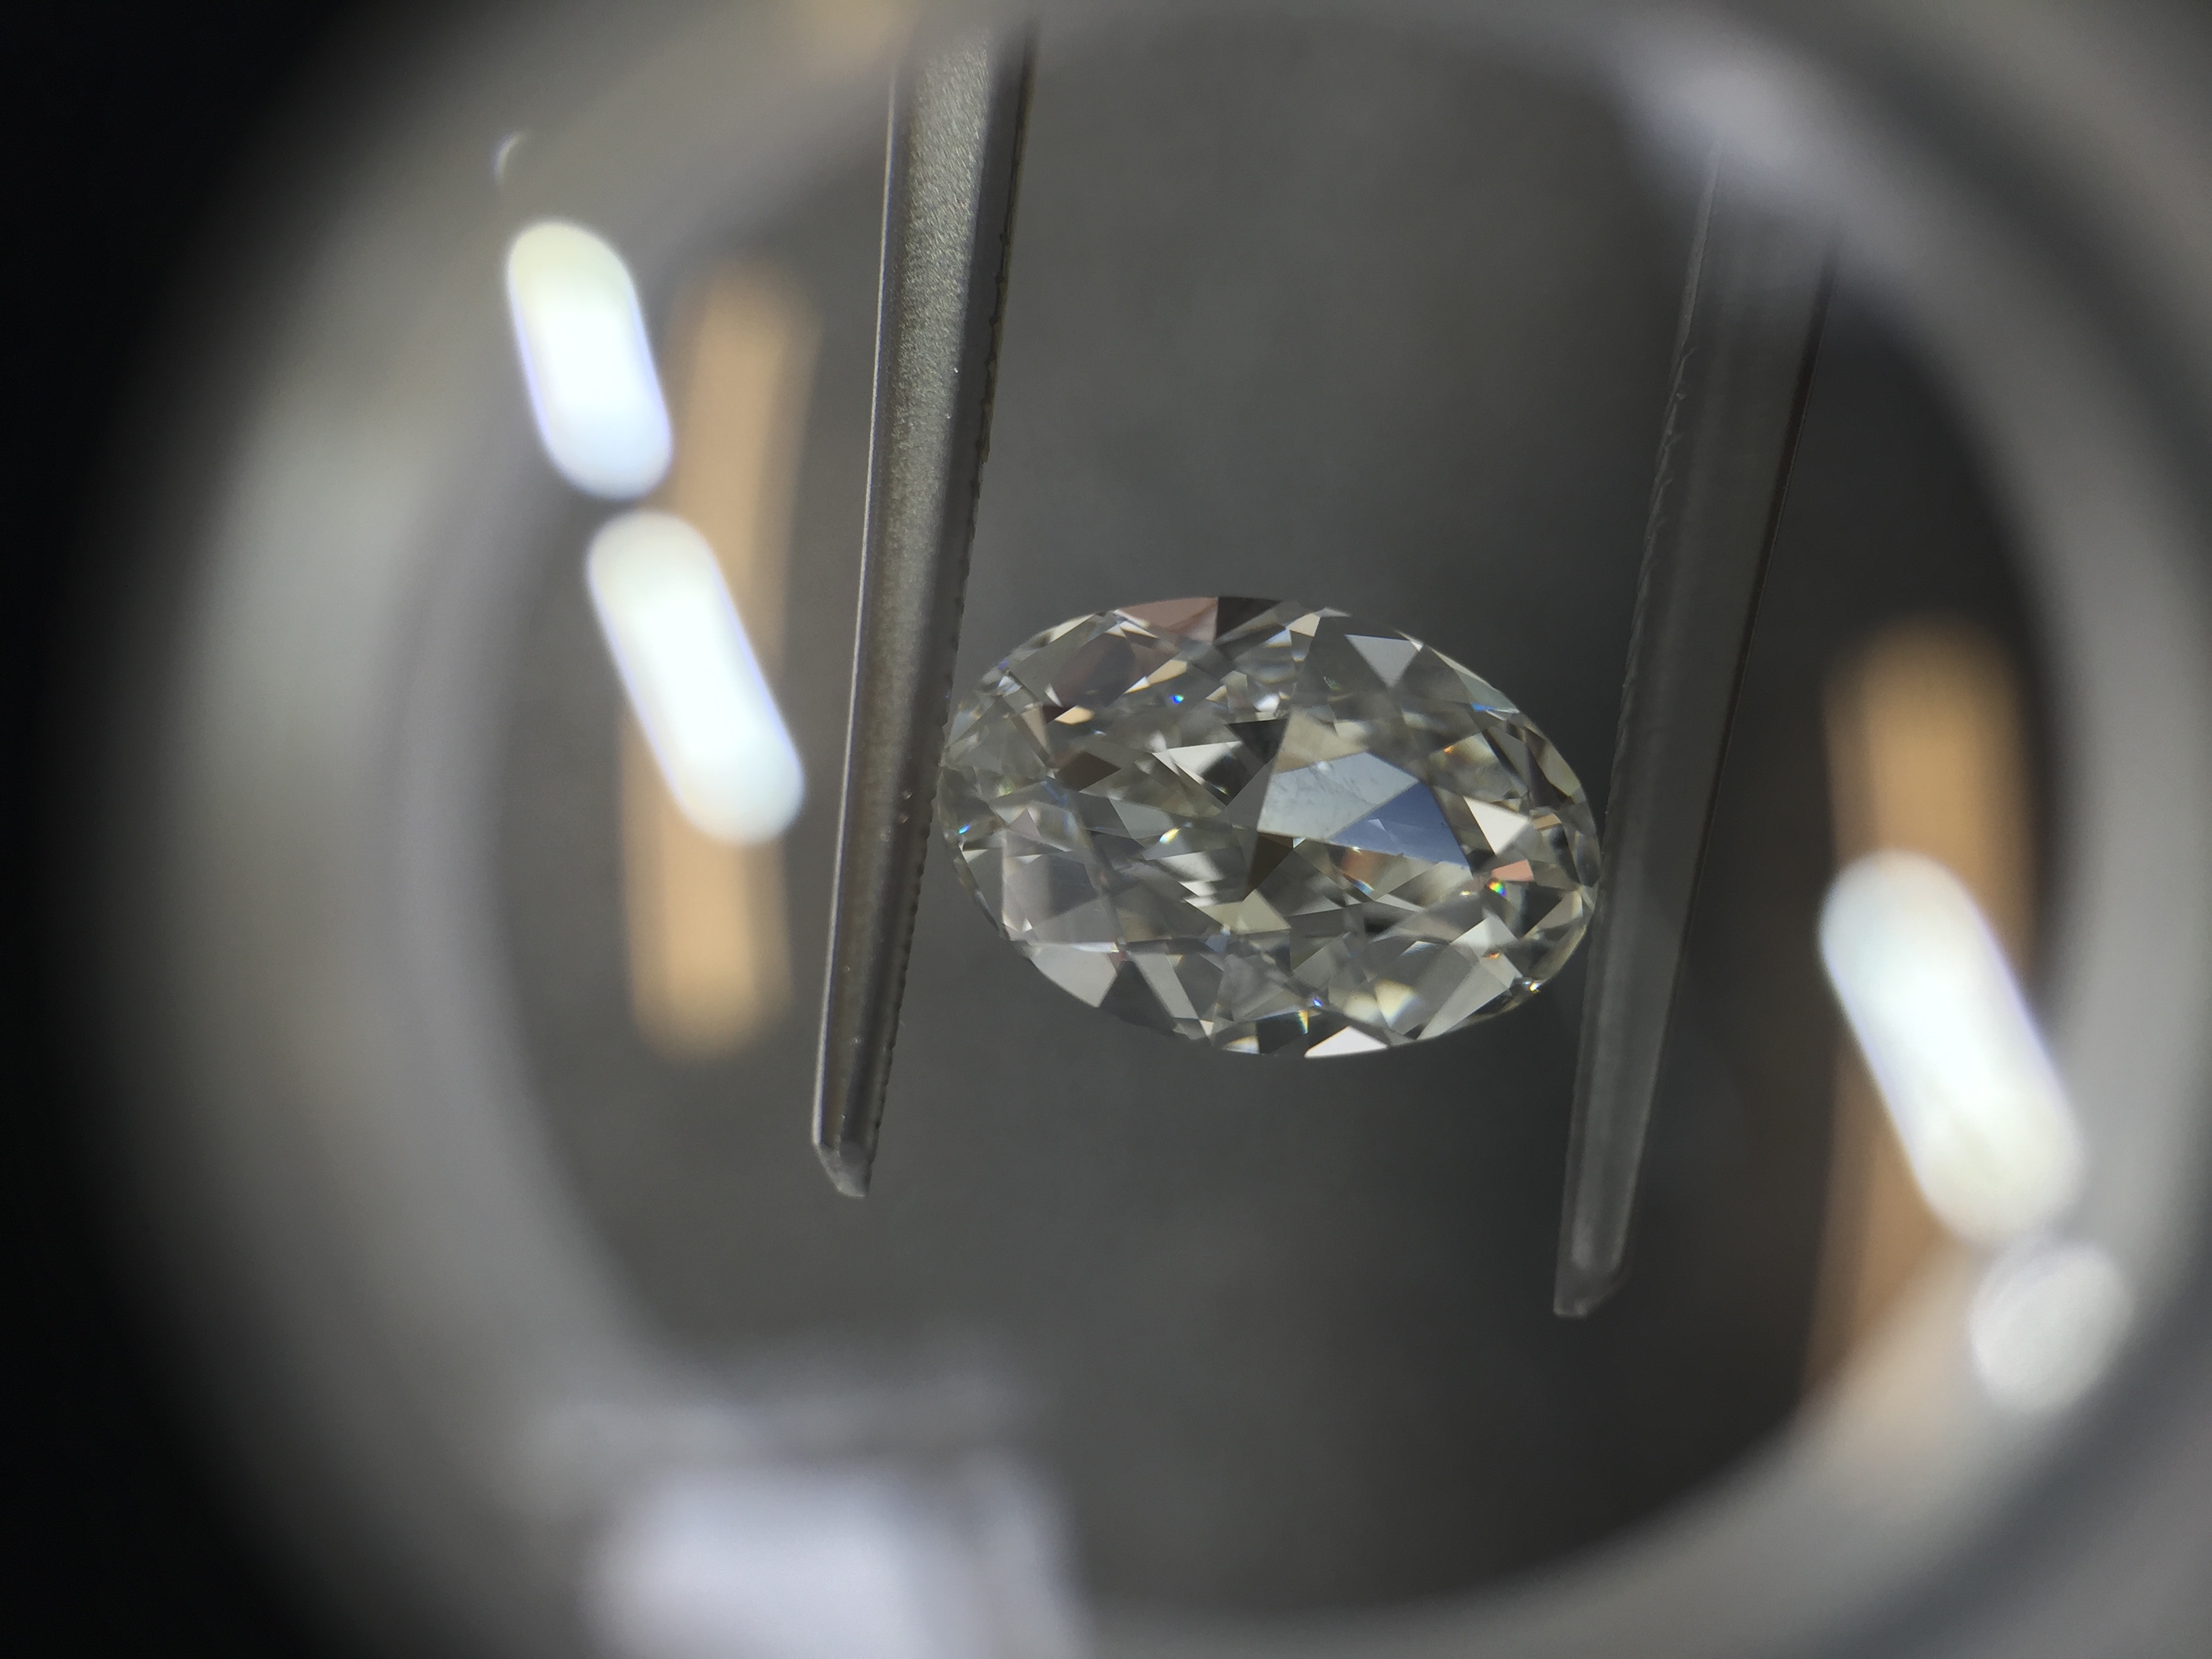 1.01ct oval cut diamond. I colour, VS1 clarity. GIA certification _ 5243030793. 8.65x 5.90 x 2.81mm.